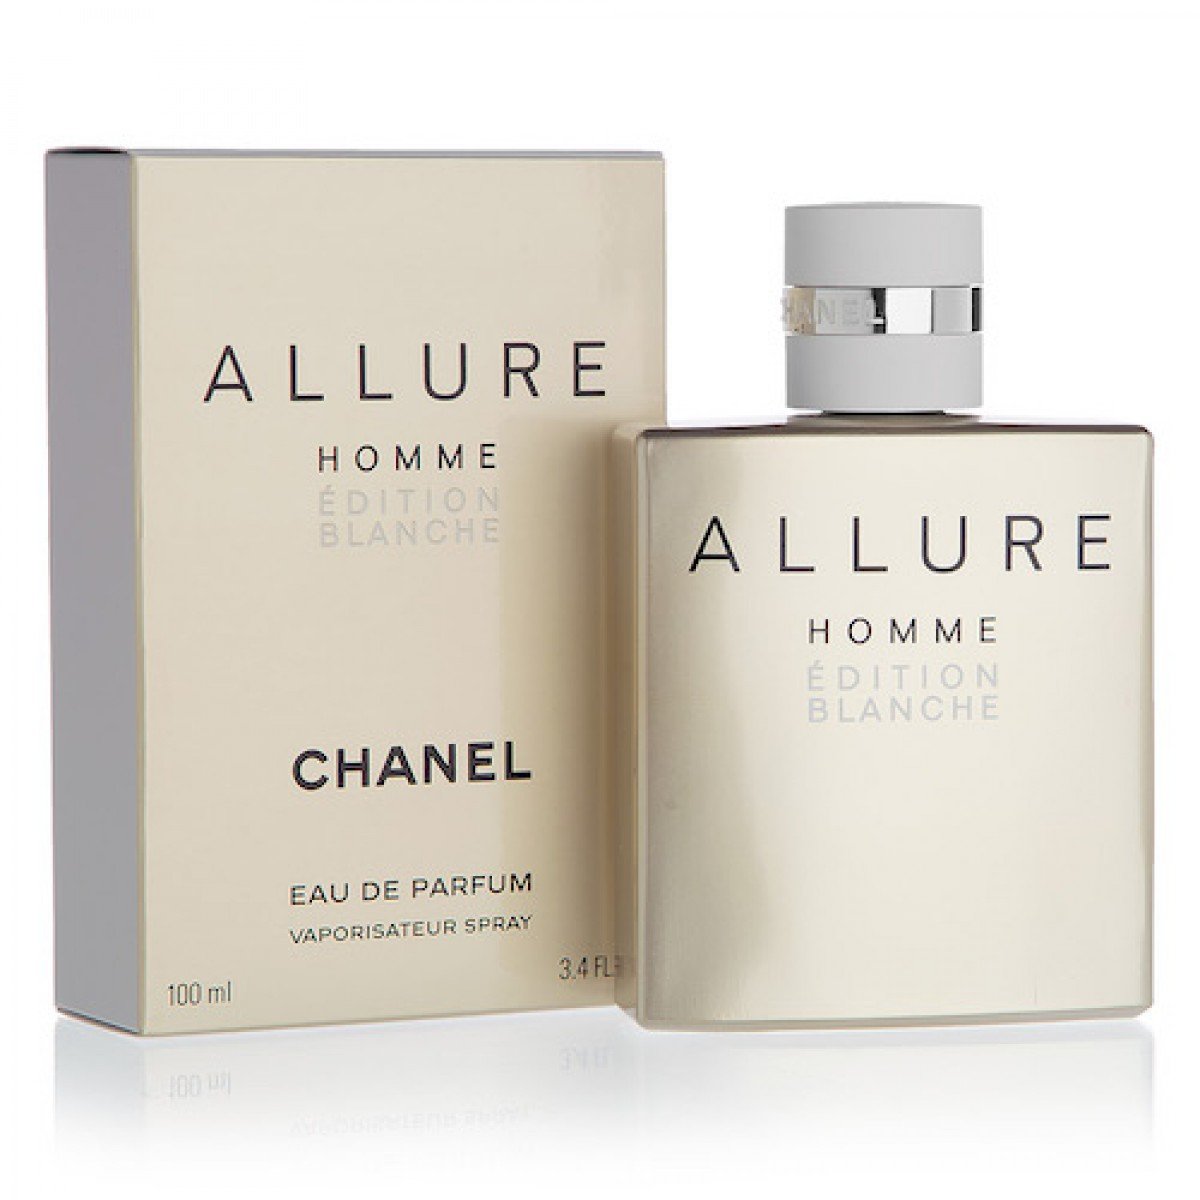 Шанель хоум мужские. Chanel Allure homme Edition Blanche 100ml. Chanel Allure homme Edition Edition. Chanel Allure homme 100 ml. Chanel Allure homme Edition Blanche Eau de Parfum.